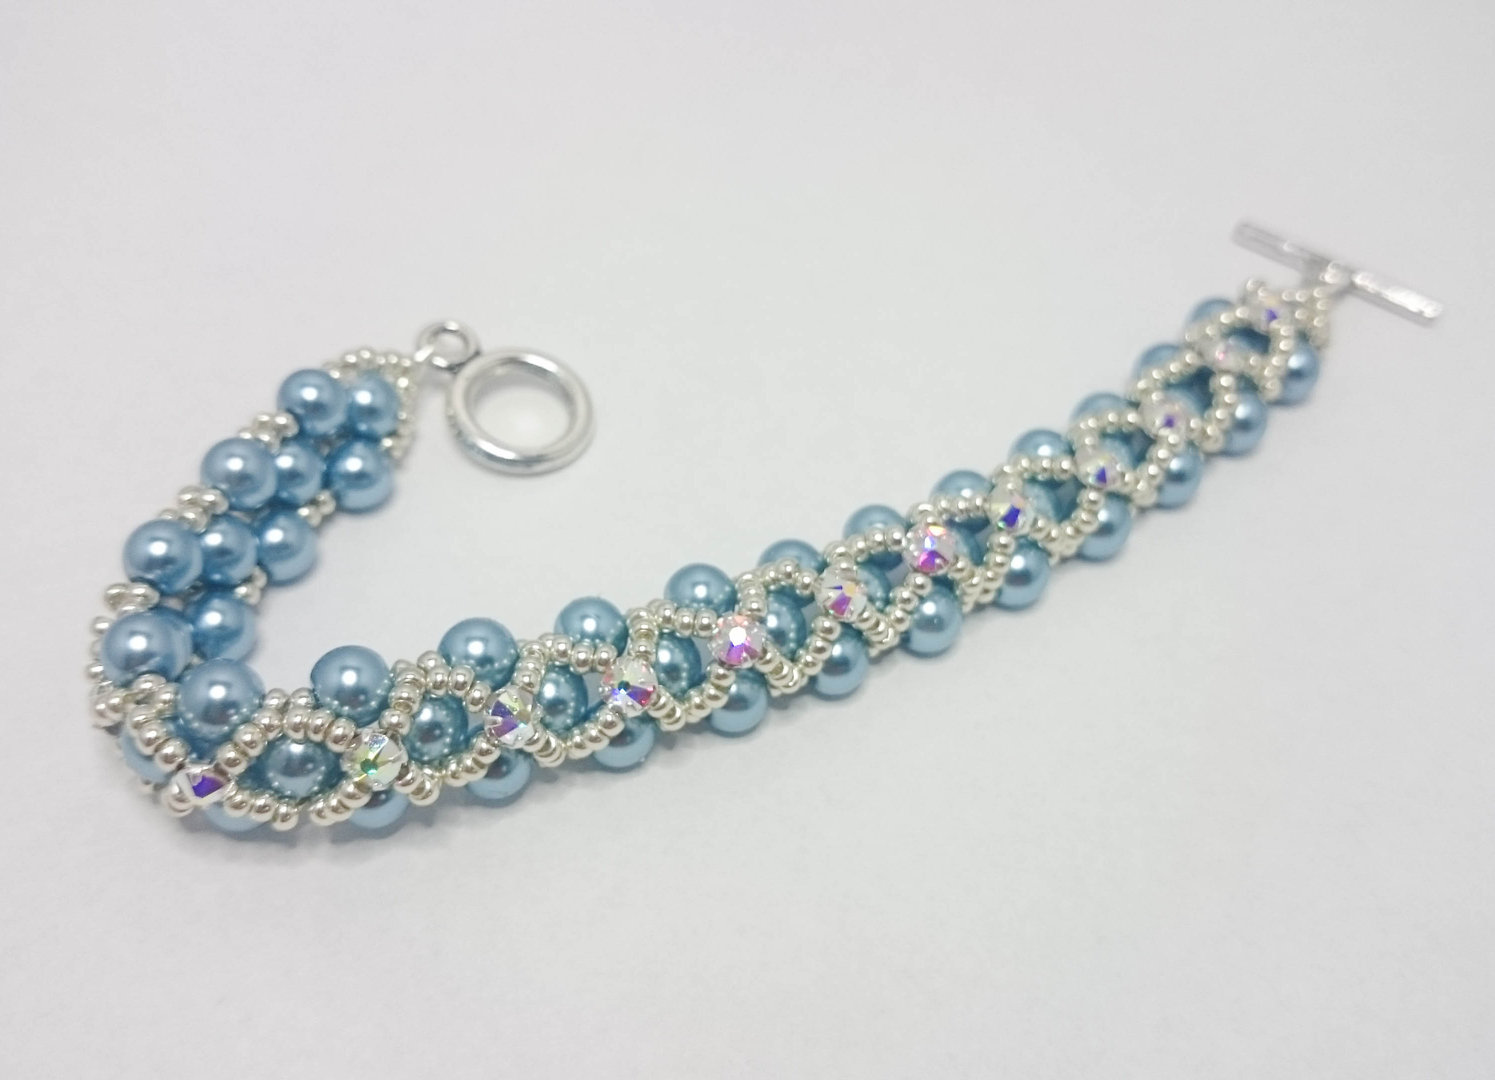 Armband "Kelly" mit Perlen (Imitation) und Swarovski Elements hellblau